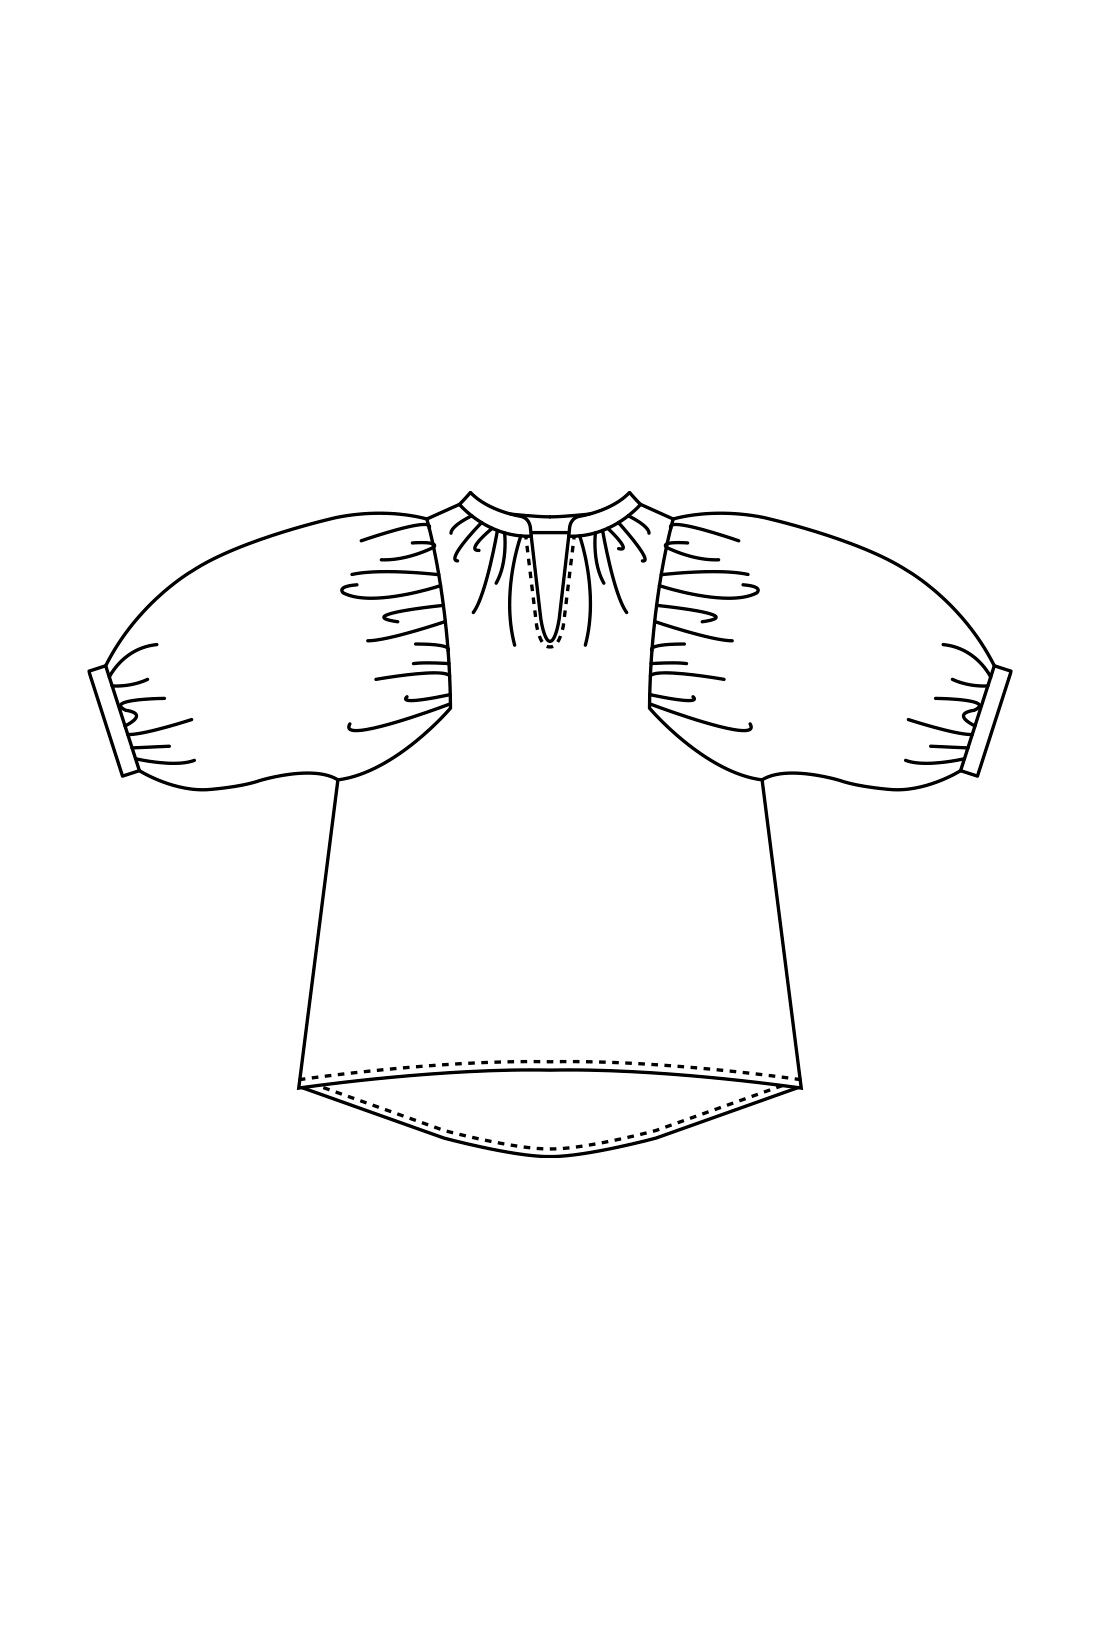 IEDIT|IEDIT[イディット]　コーデの鮮度をアップする 大人華やかなペイズリープリントロングブラウス〈イエロー〉|腰まわりが隠れるチュニック丈とボリューミーな袖が女性らしいゆったりデザイン。七分袖はカフス後ろがプッシュアップしやすいゴムシャーリング仕様。